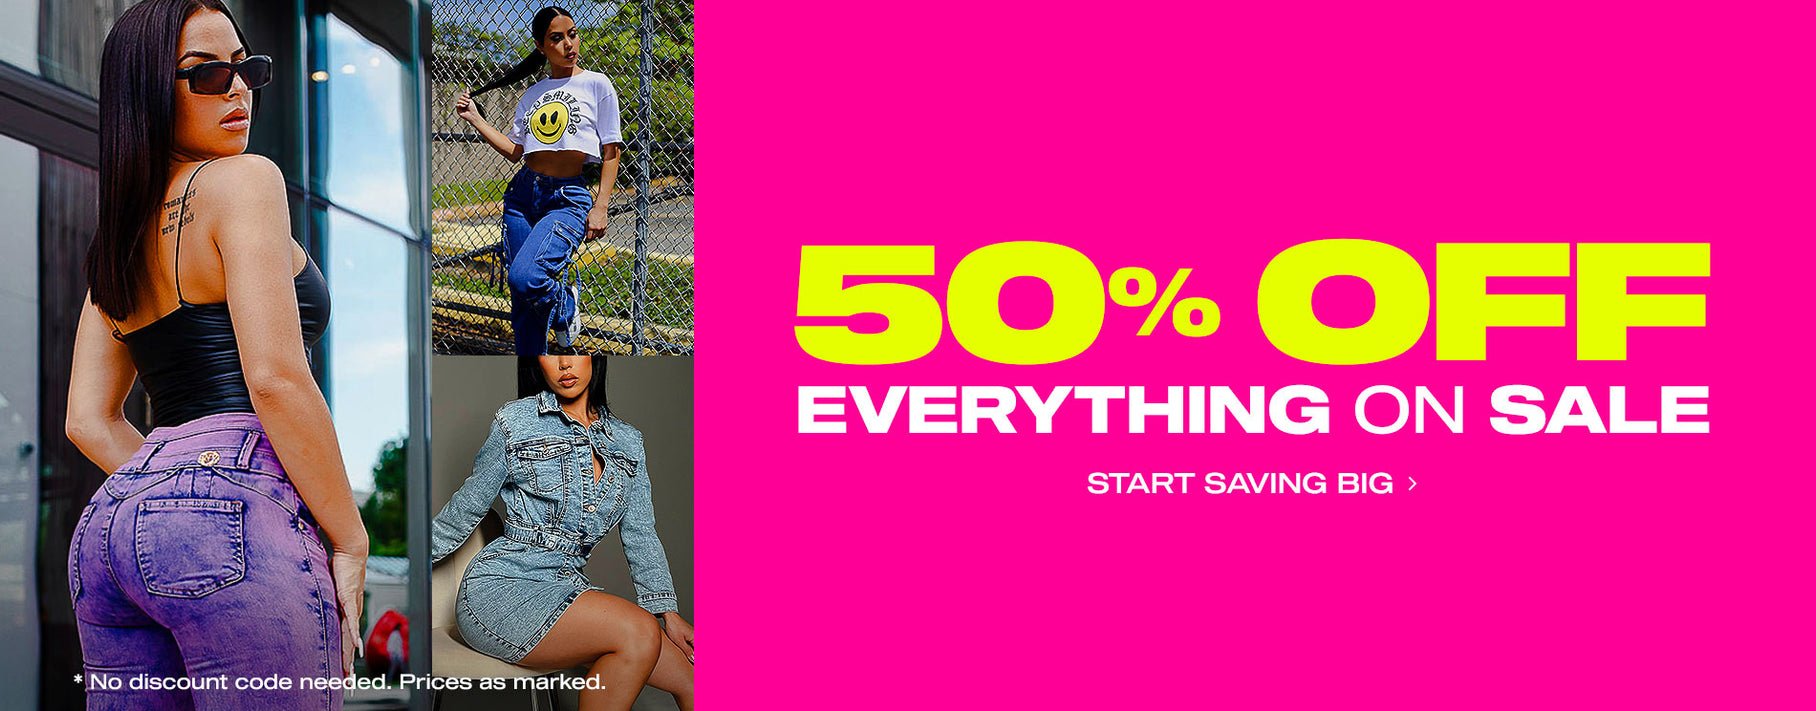 50% Off Everything On Sale: Start Saving Big